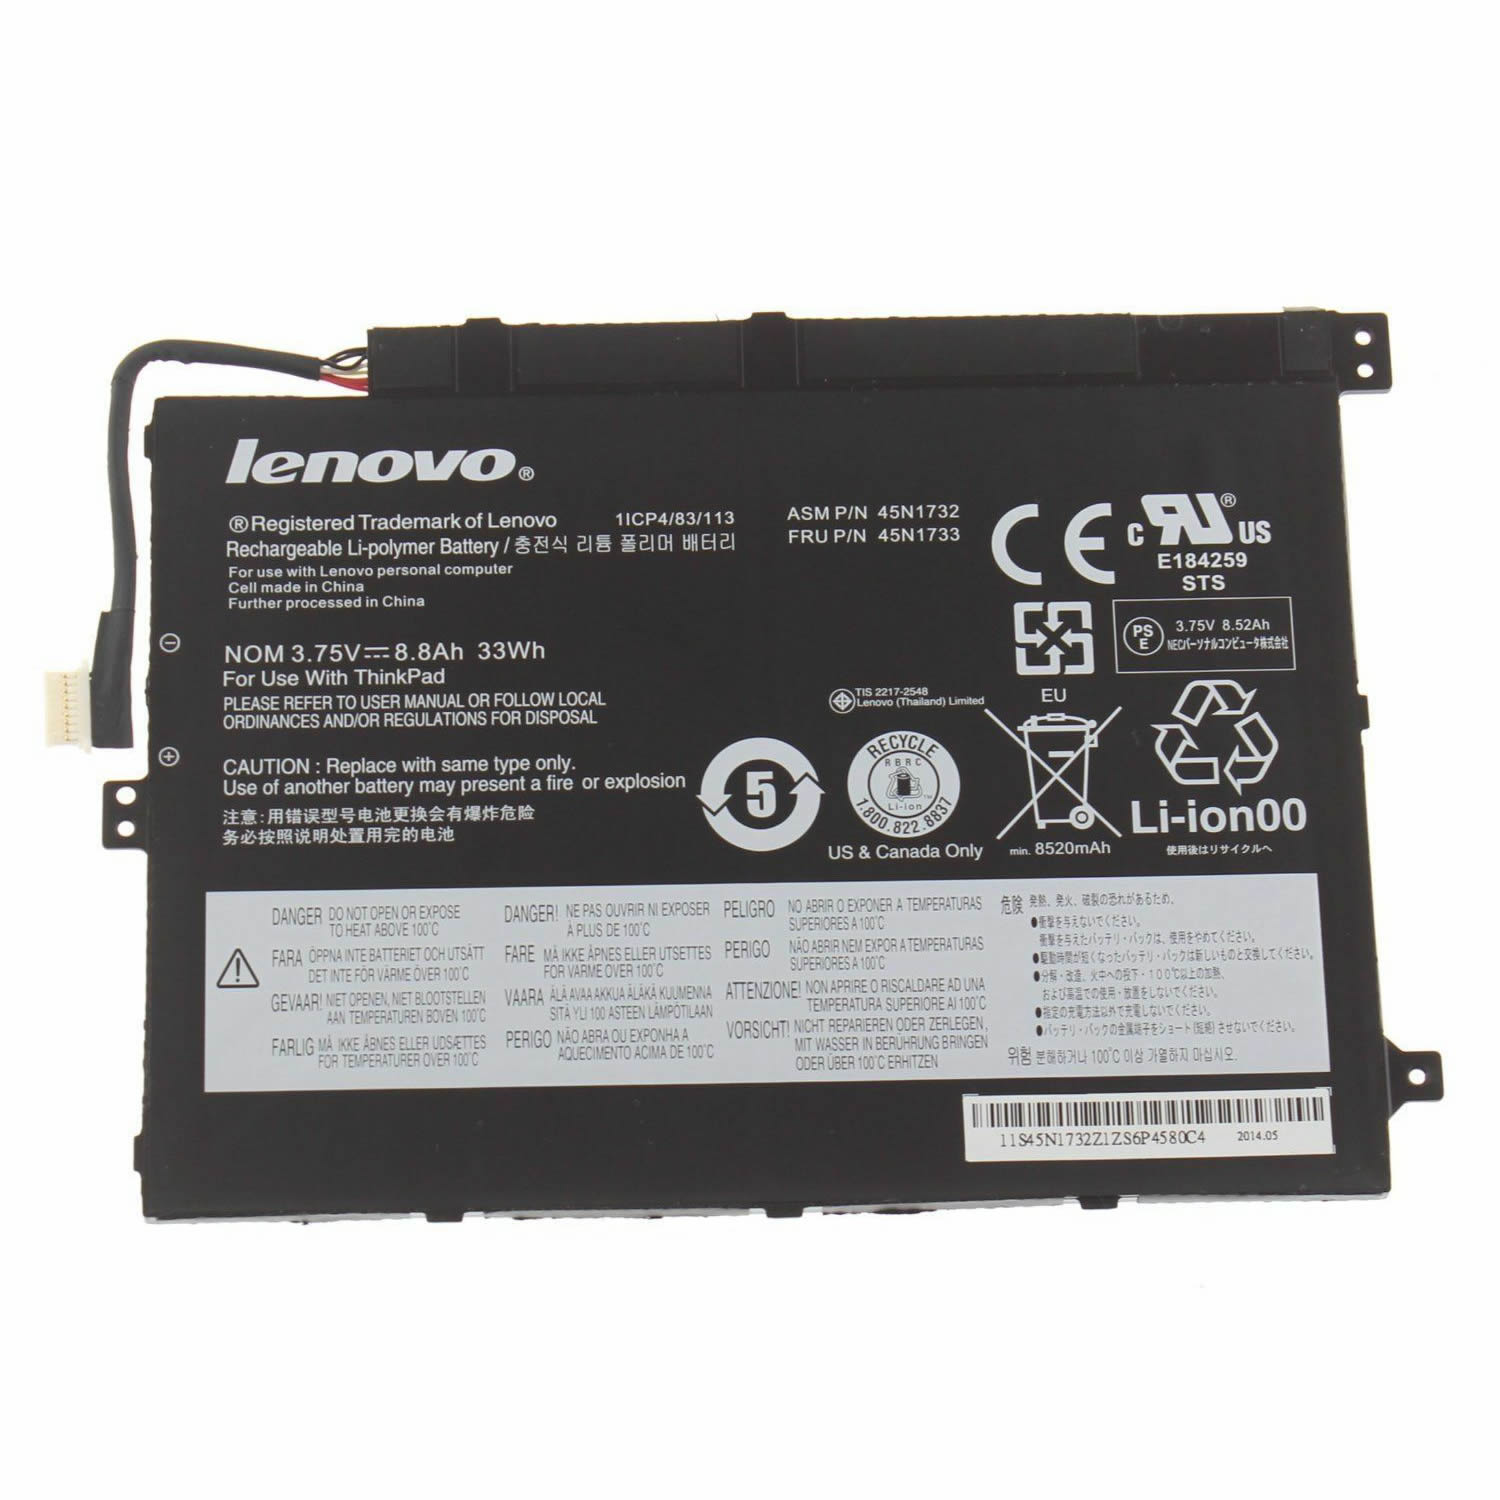 Batterie originale Lenovo 45N1728 45N1729 45N1726 45N1727 3.75V 33Wh pour ordinateur portable Lenovo Thinkpad 10 2014, ThinkPad Tablet 10 séries